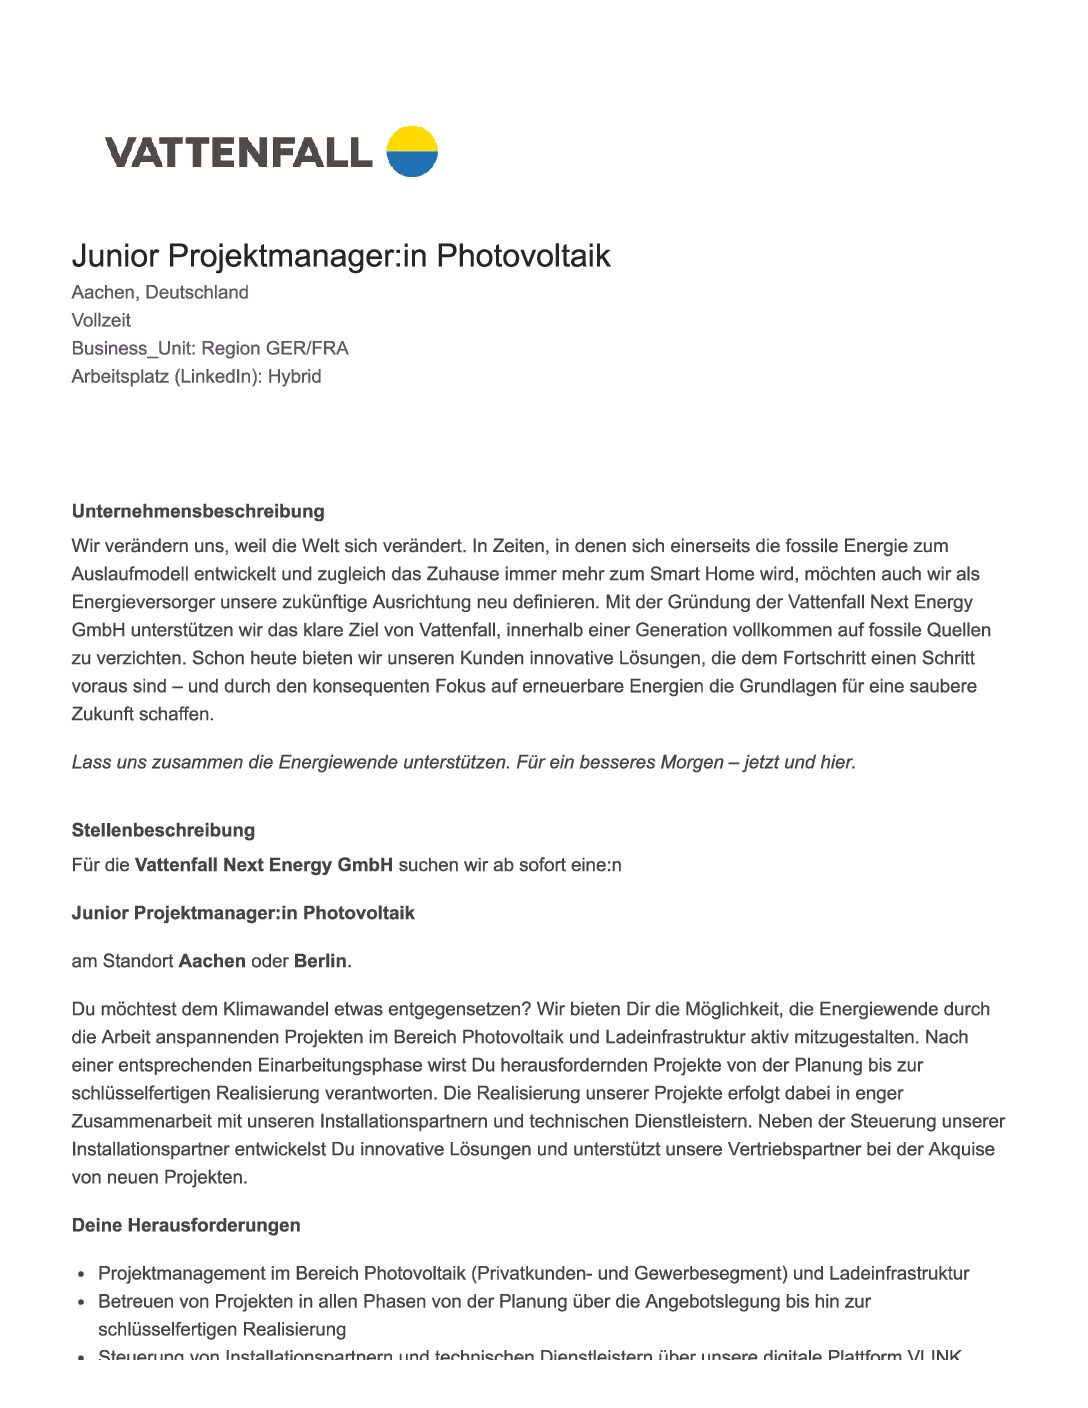 Vattenfall_Junior-Projektmanager-Photovoltaik-4-pdf  